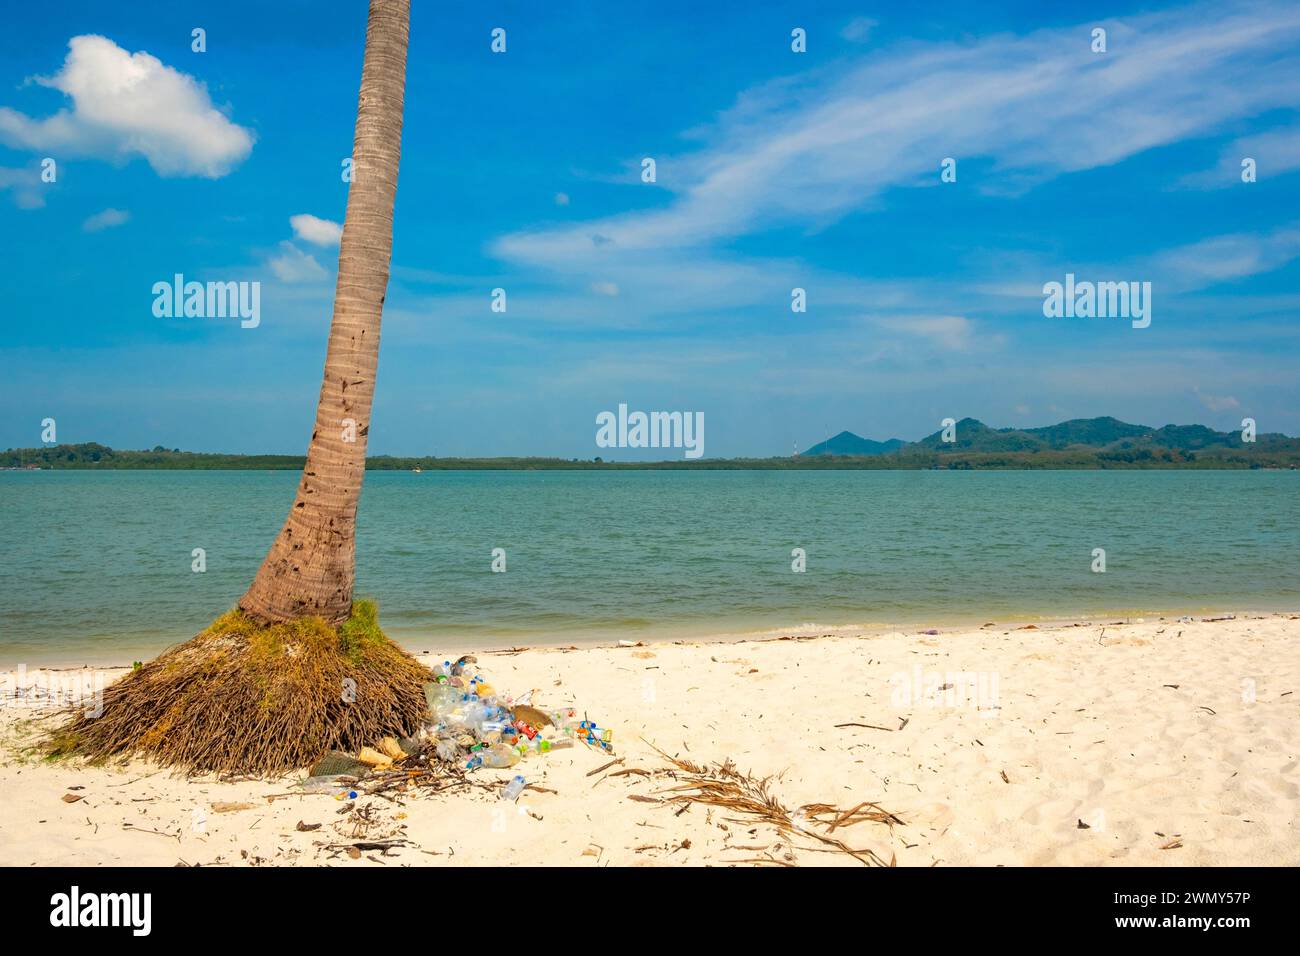 Thailand, Provinz Phuket, Insel Koh Yao Yai, weiße Sandbank Hua Lam Haad Stockfoto